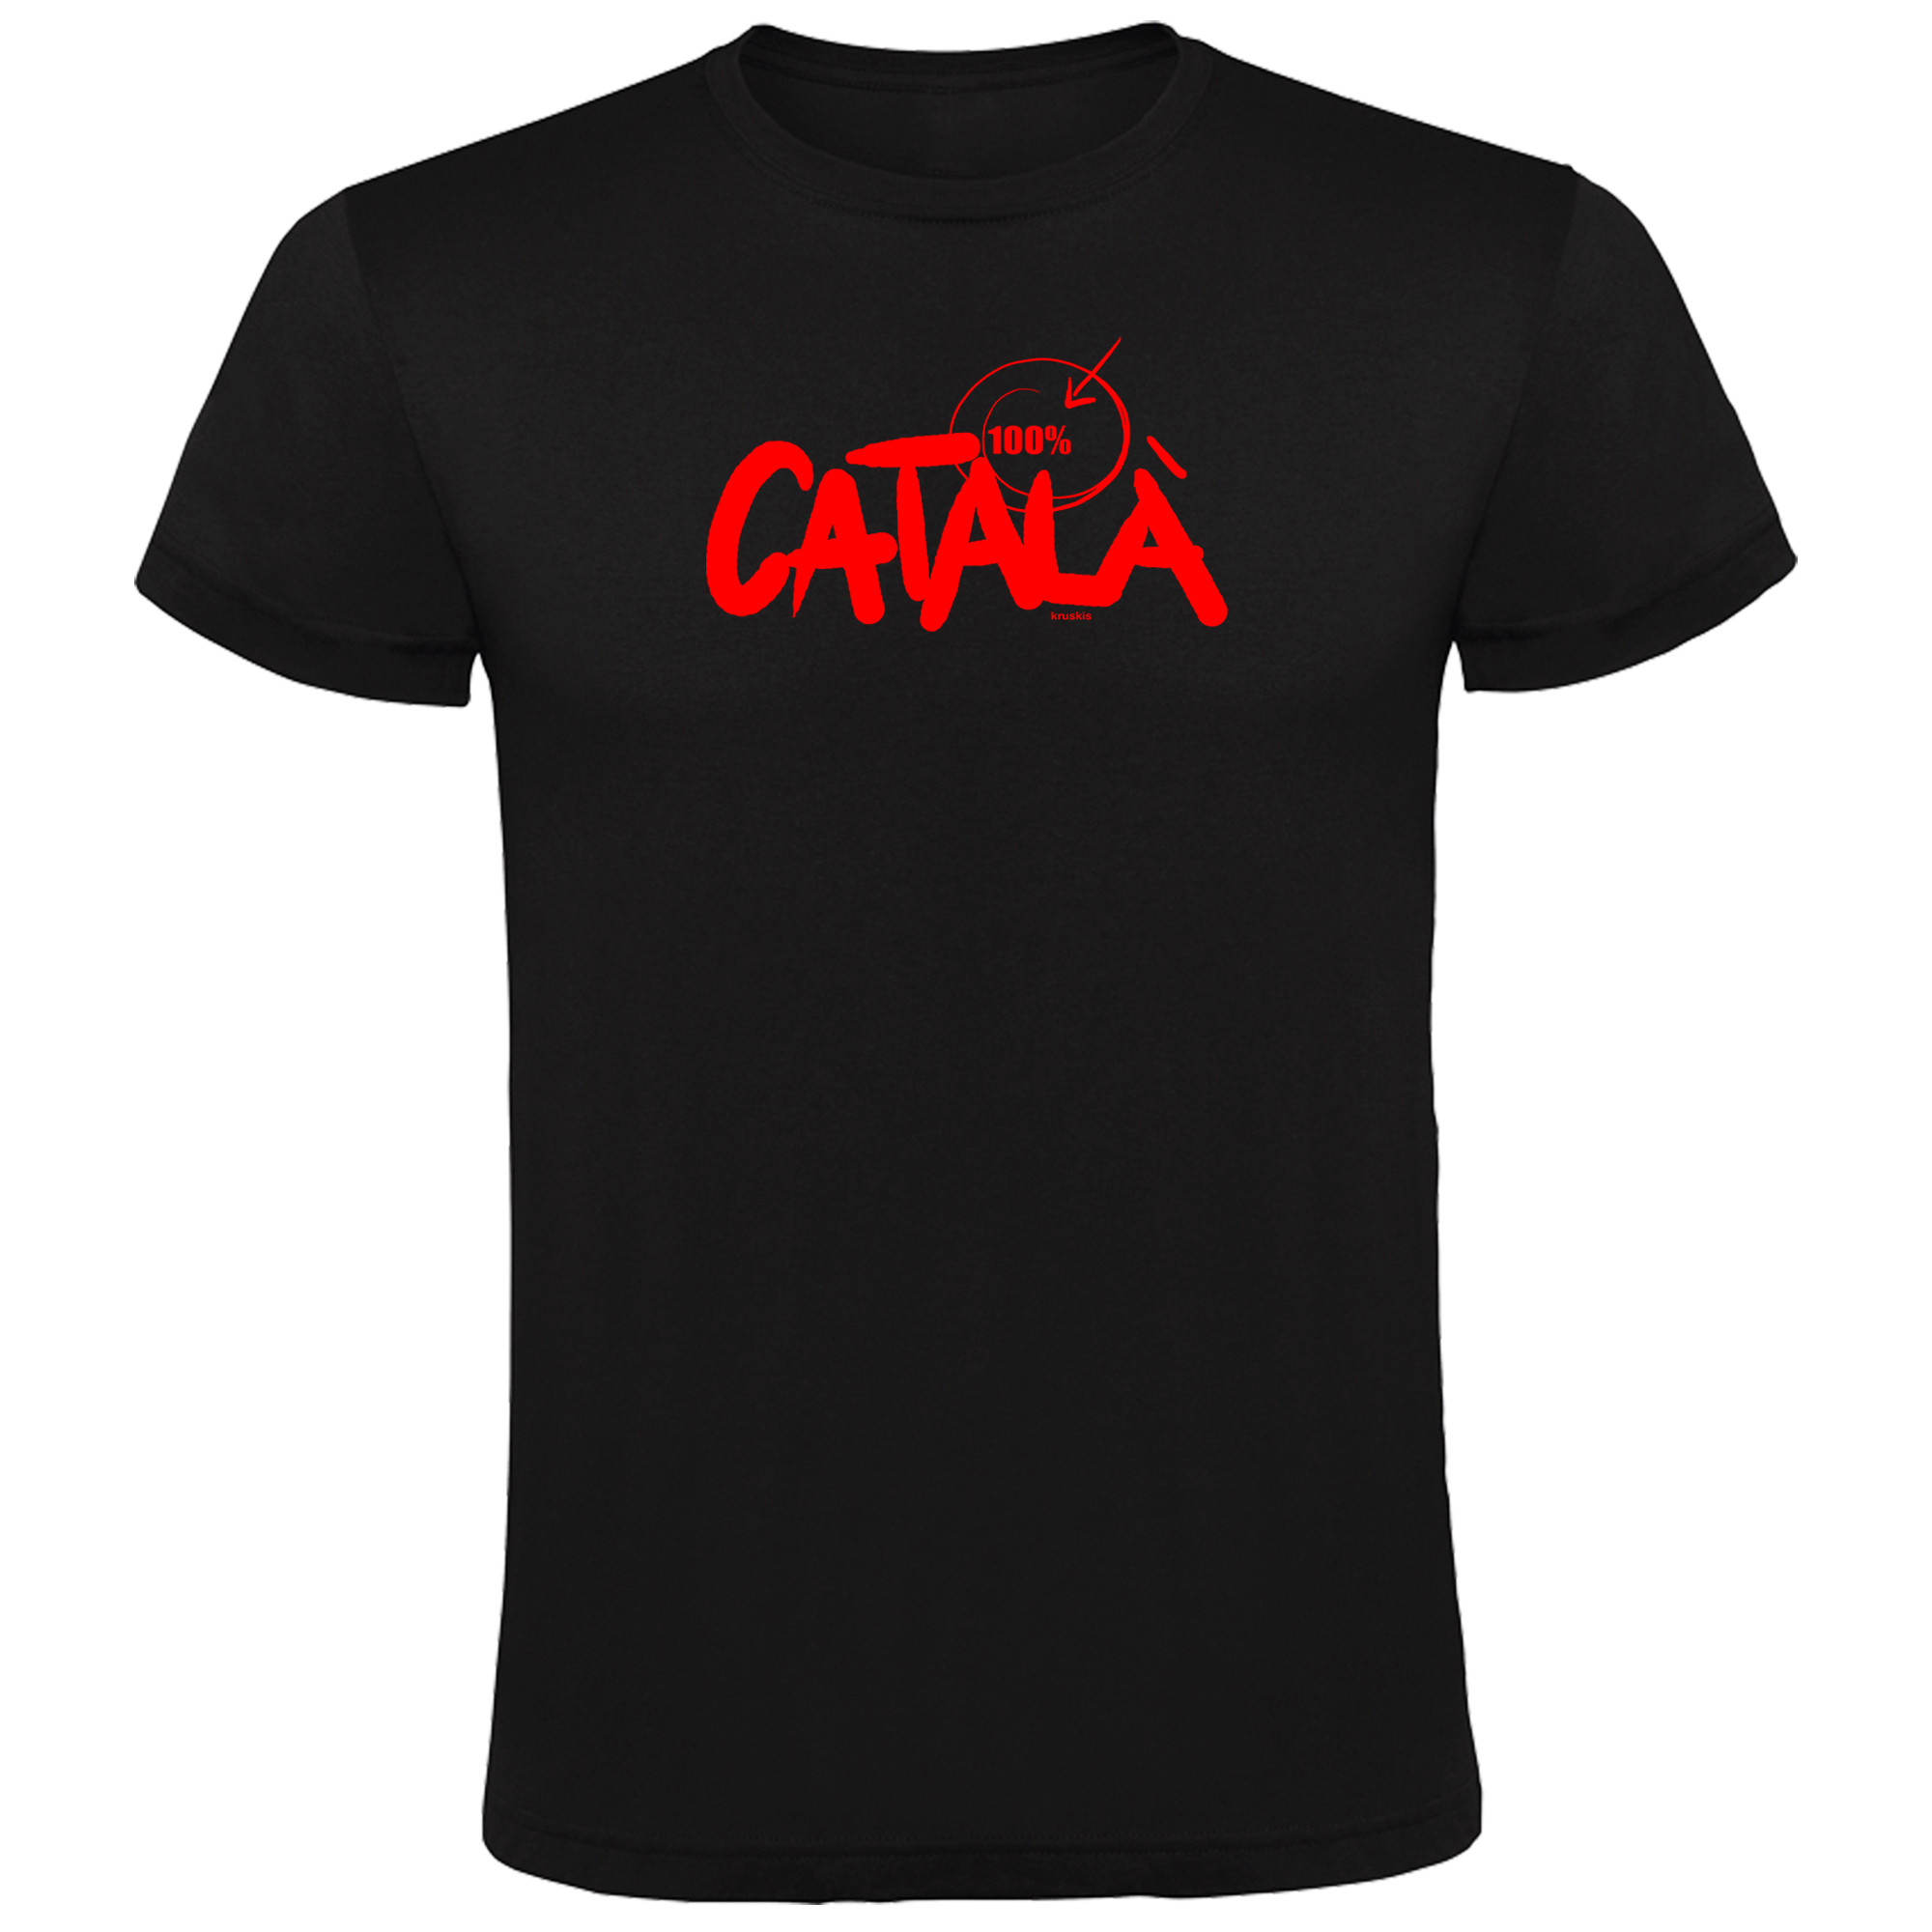 T Shirt Katalonien 100% Catala Zurzarm Mann